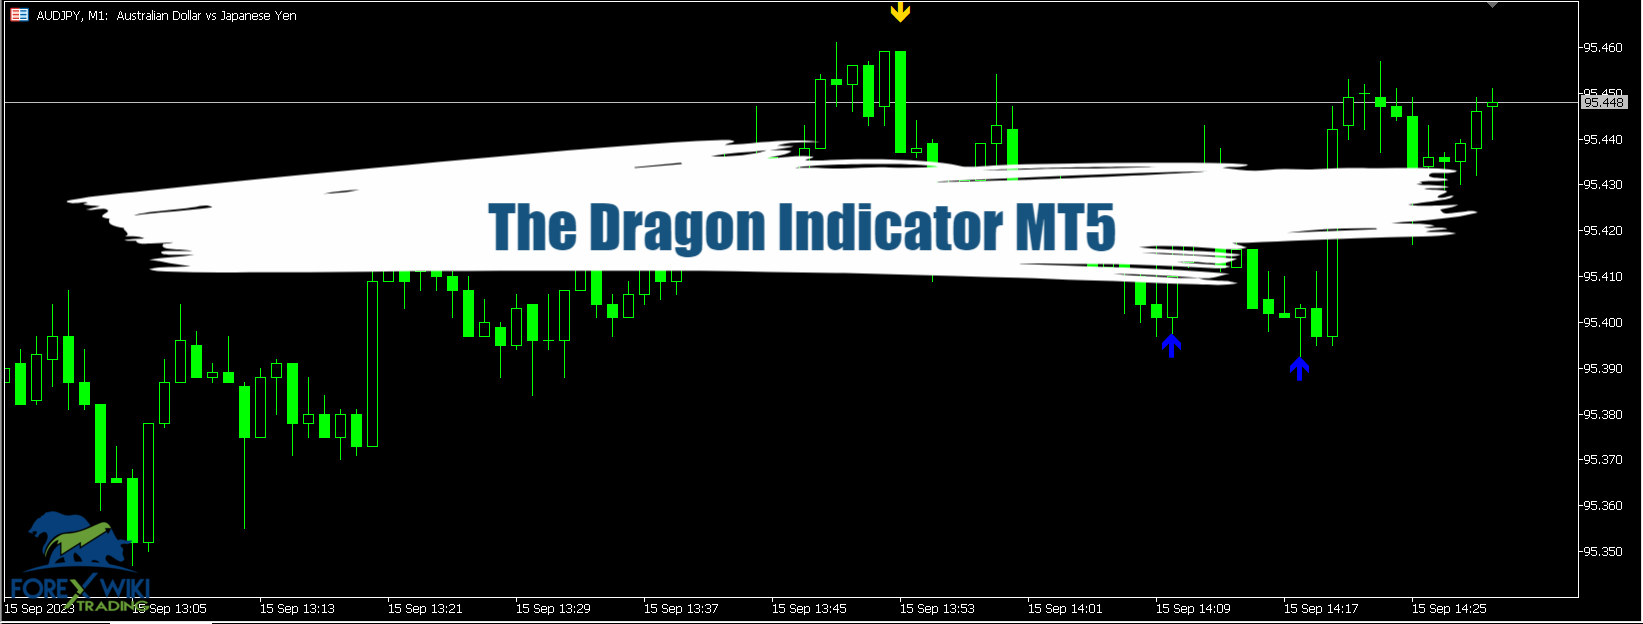 The Dragon Indicator MT5 - Free Download 38